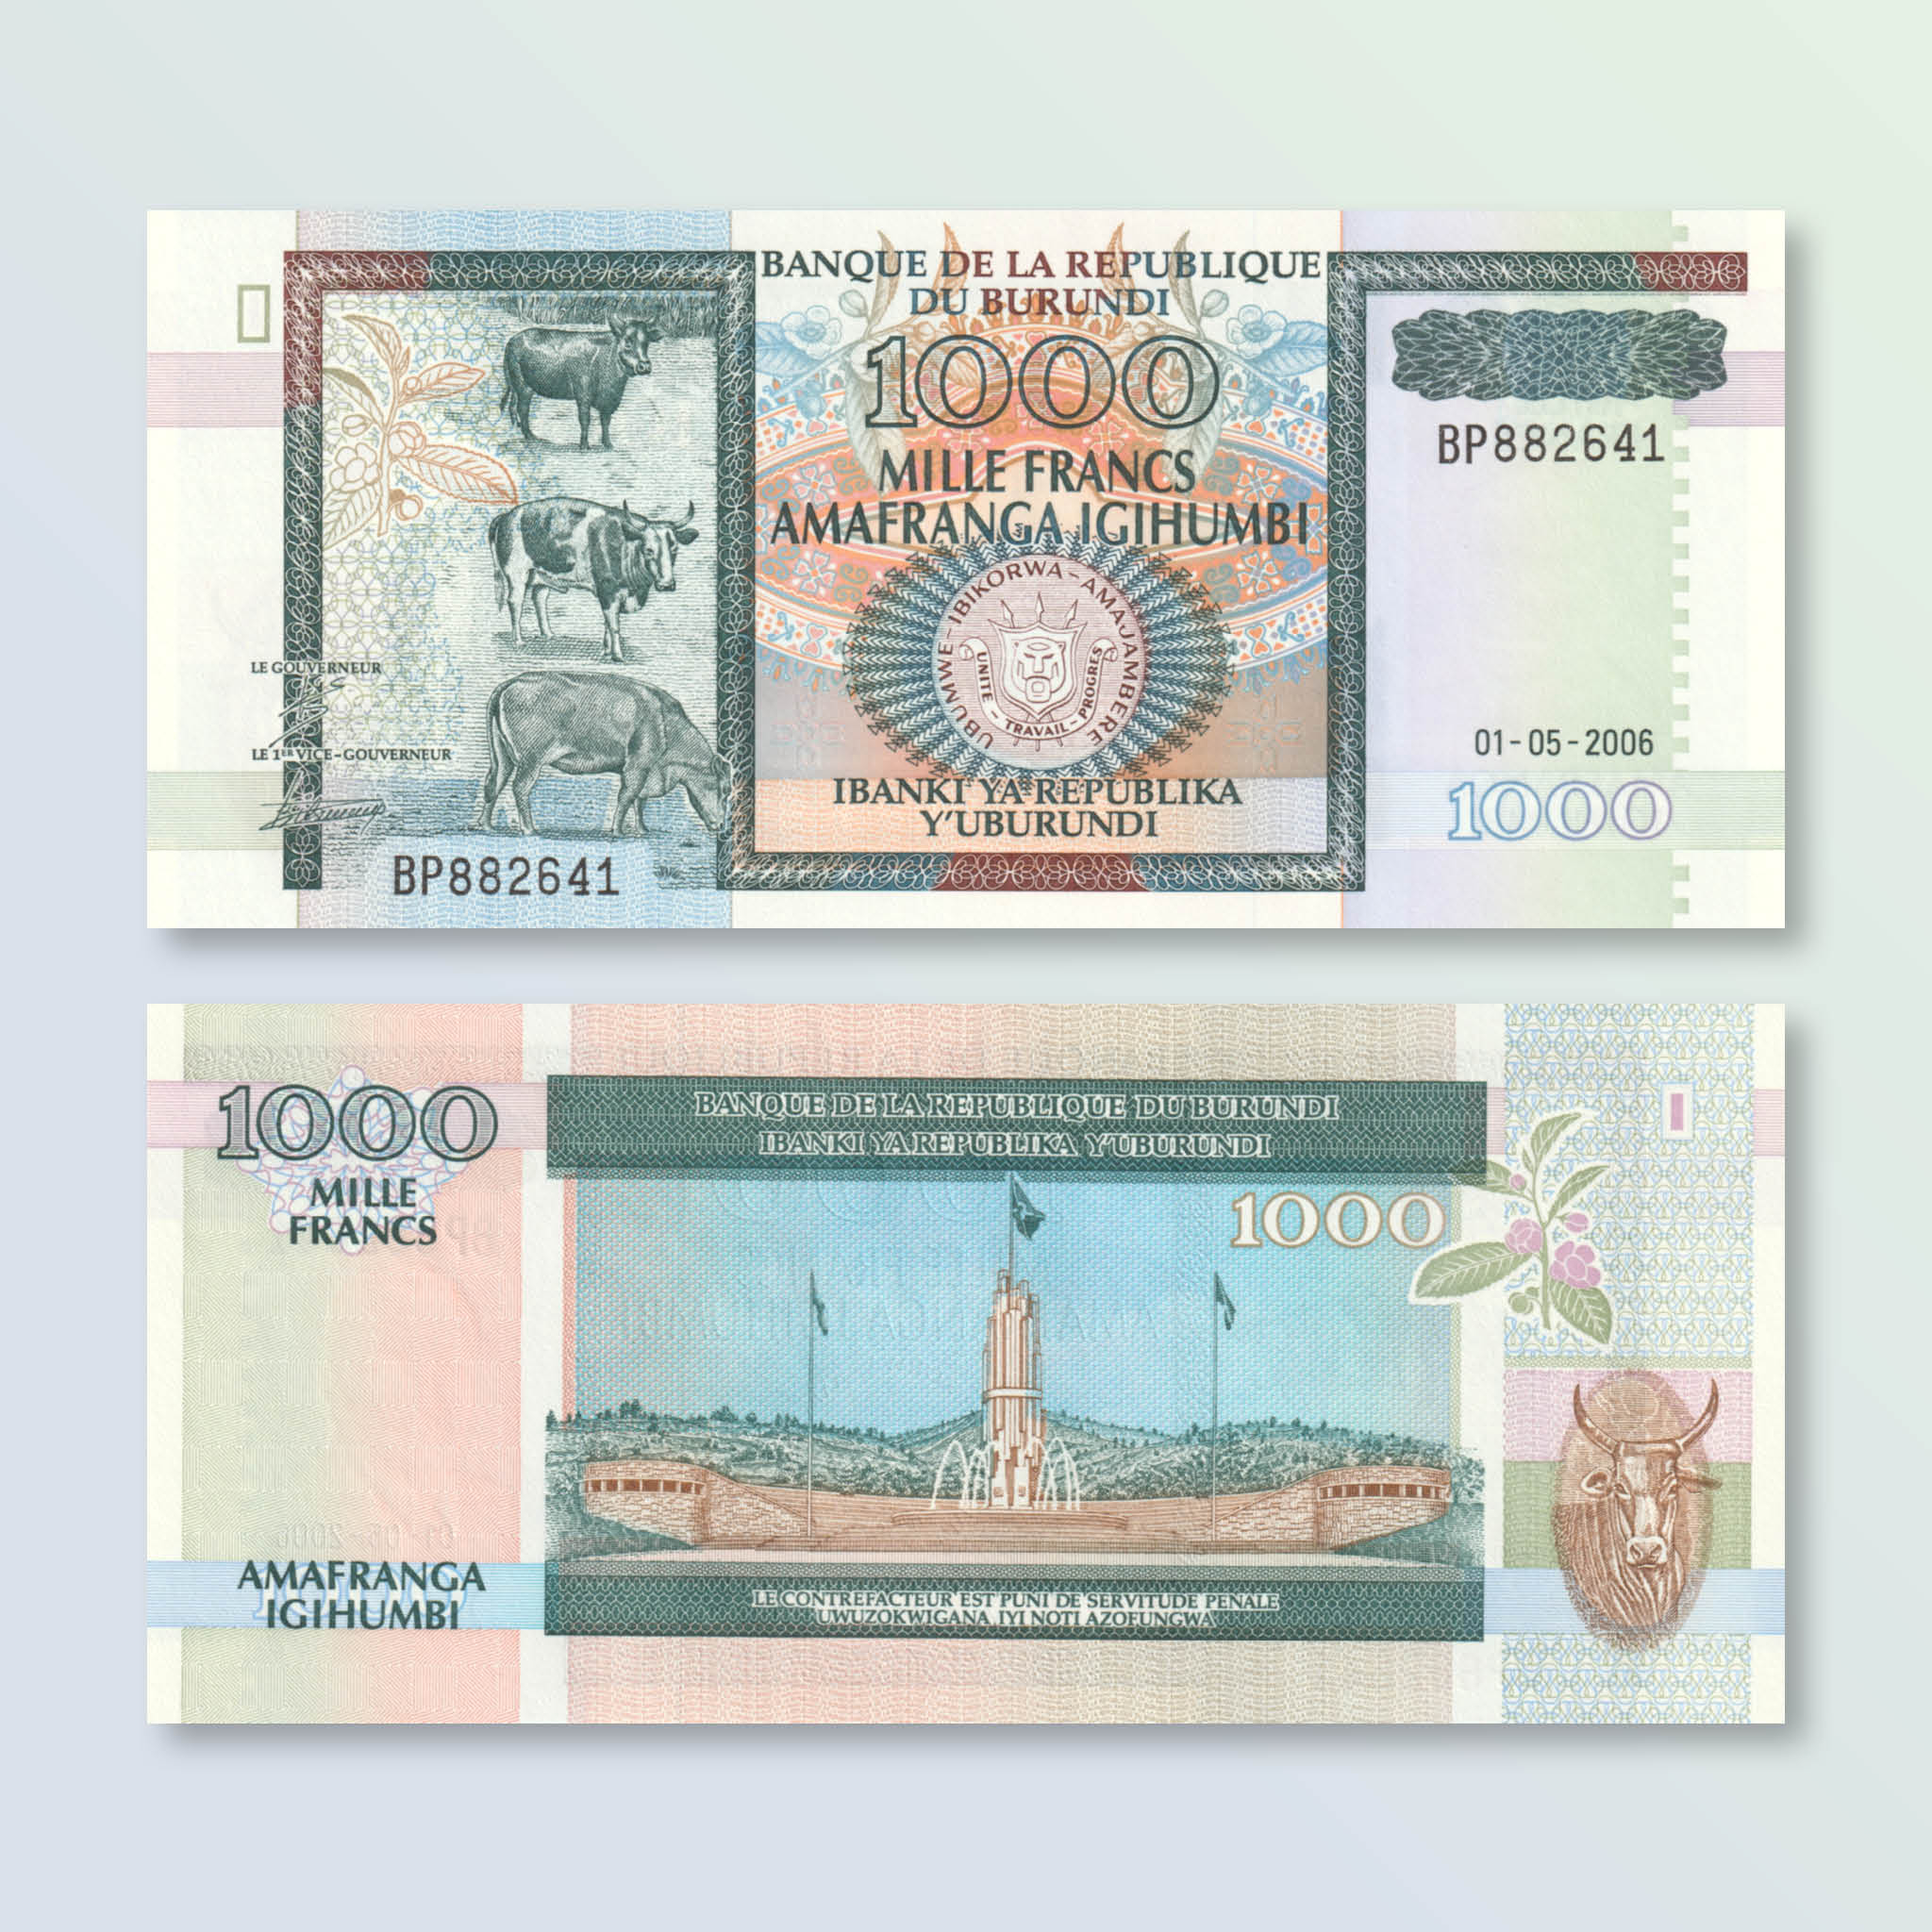 Burundi 1000 Francs, 2006, B226d, P39d, UNC - Robert's World Money - World Banknotes